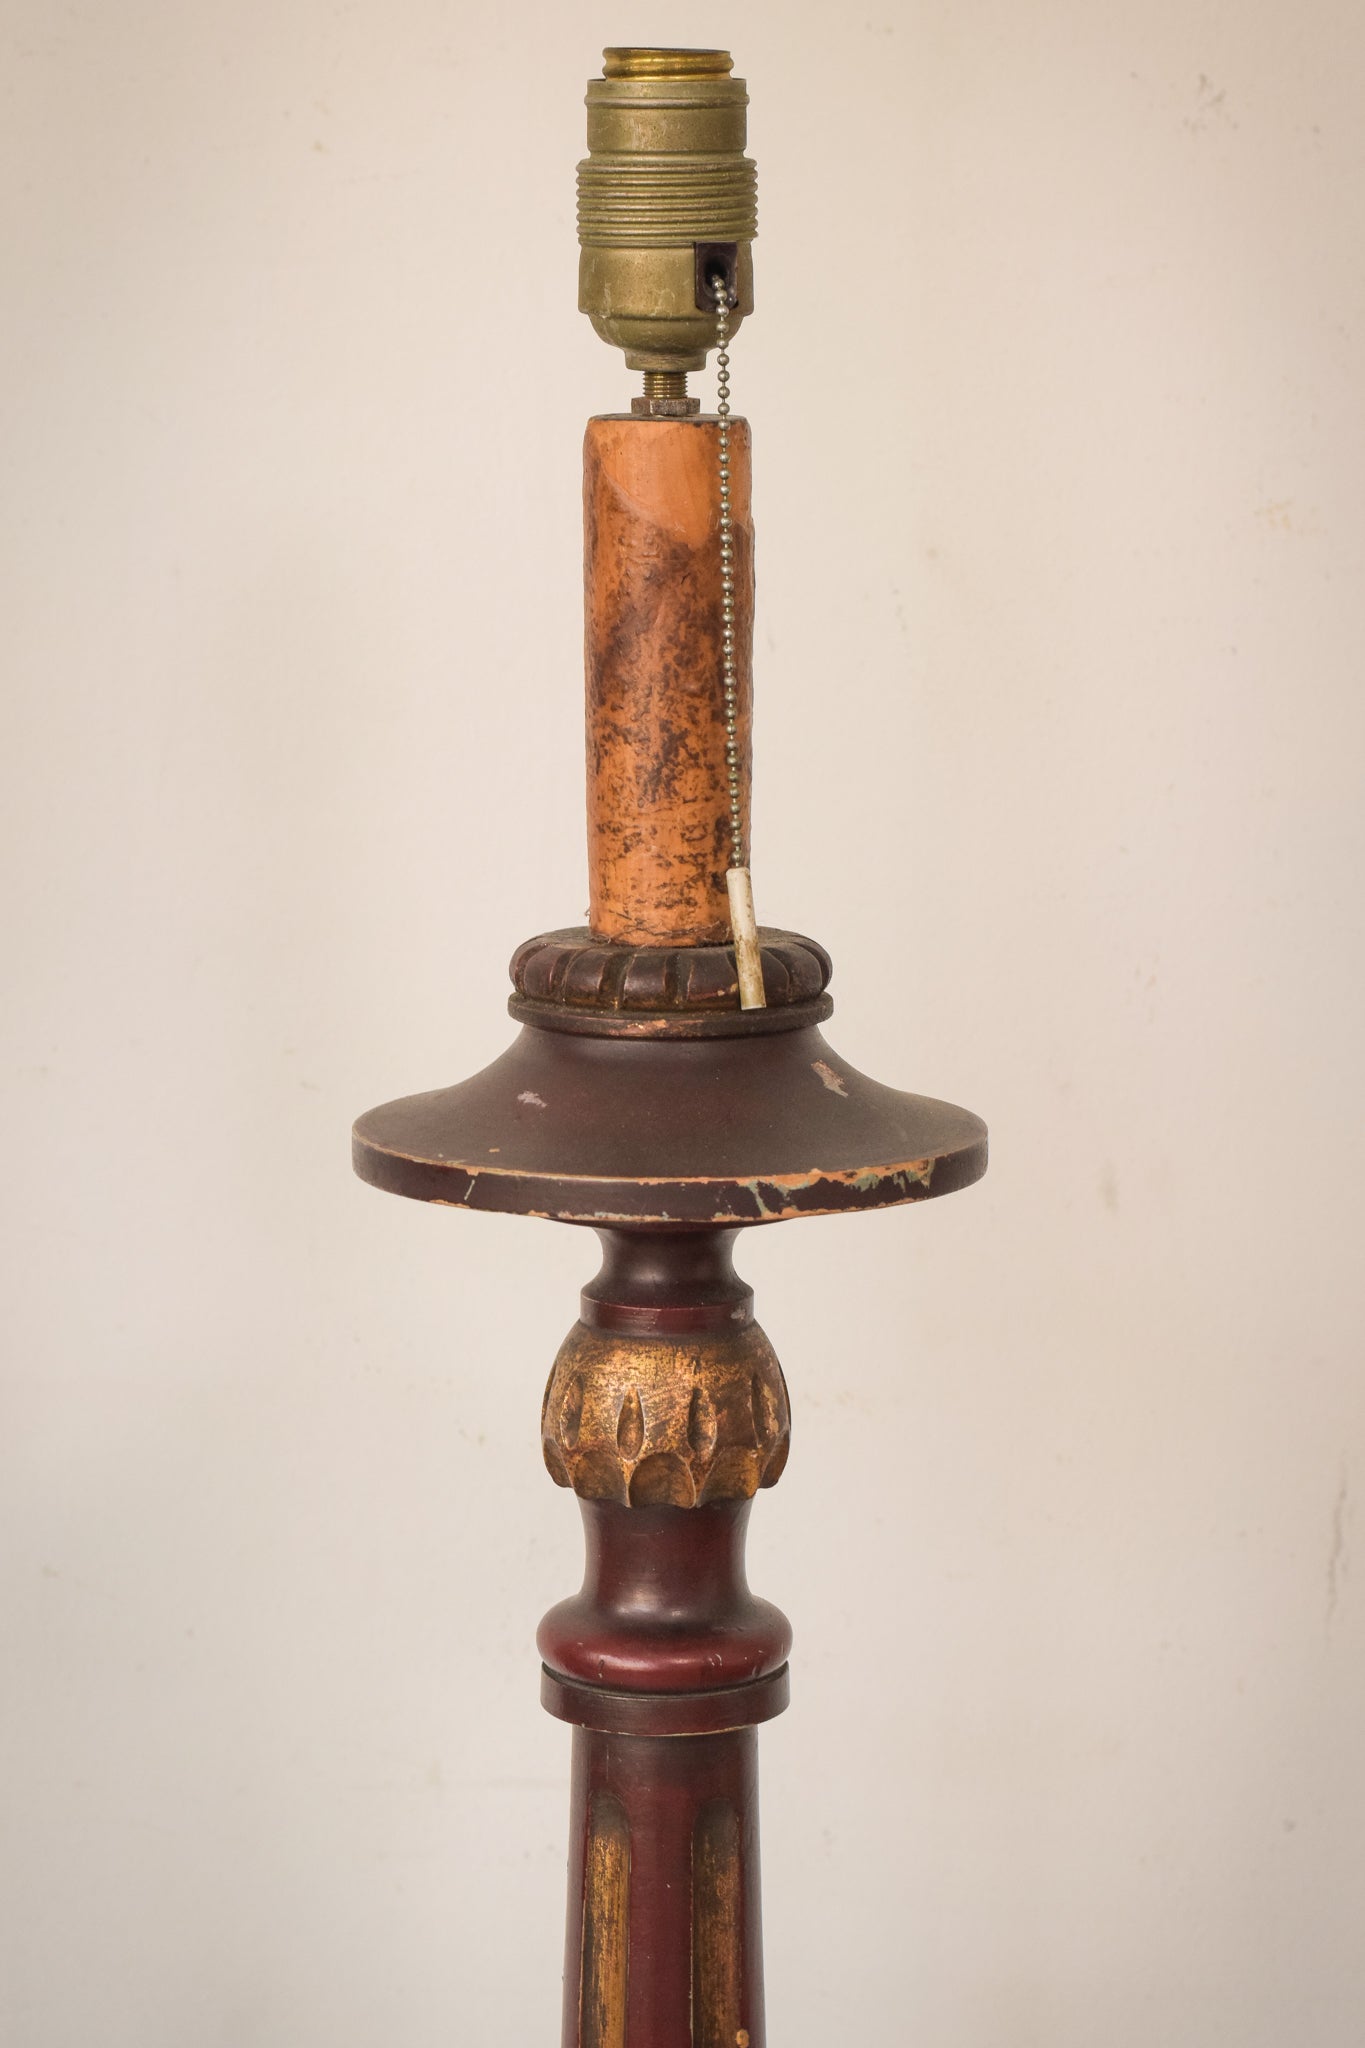 Two Vintage Carved Wooden Standard Lamps